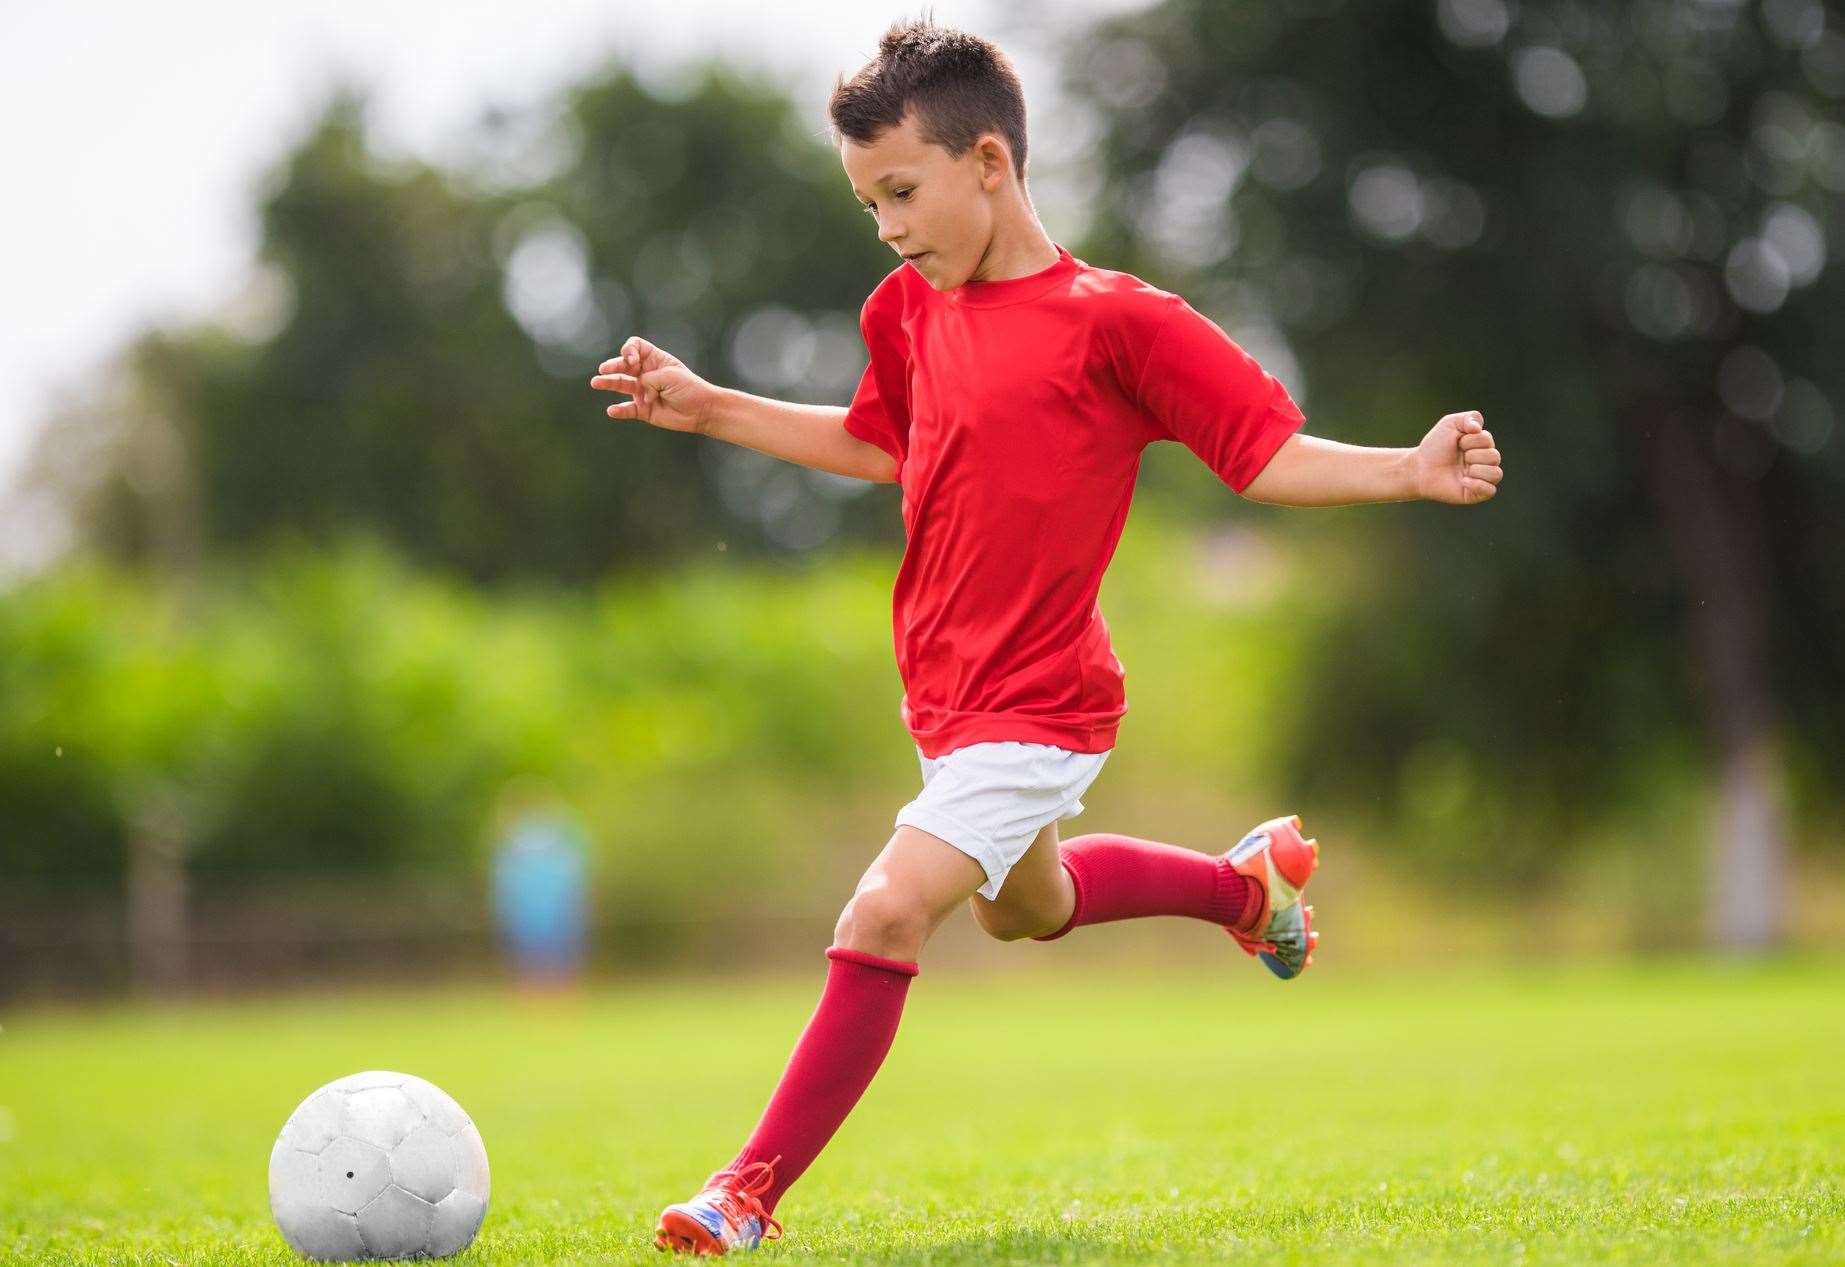 How to play sports. Мальчик с мячом. Футбол дети. Ребенок с футбольным мячом. Мальчик с футбольным мячом.